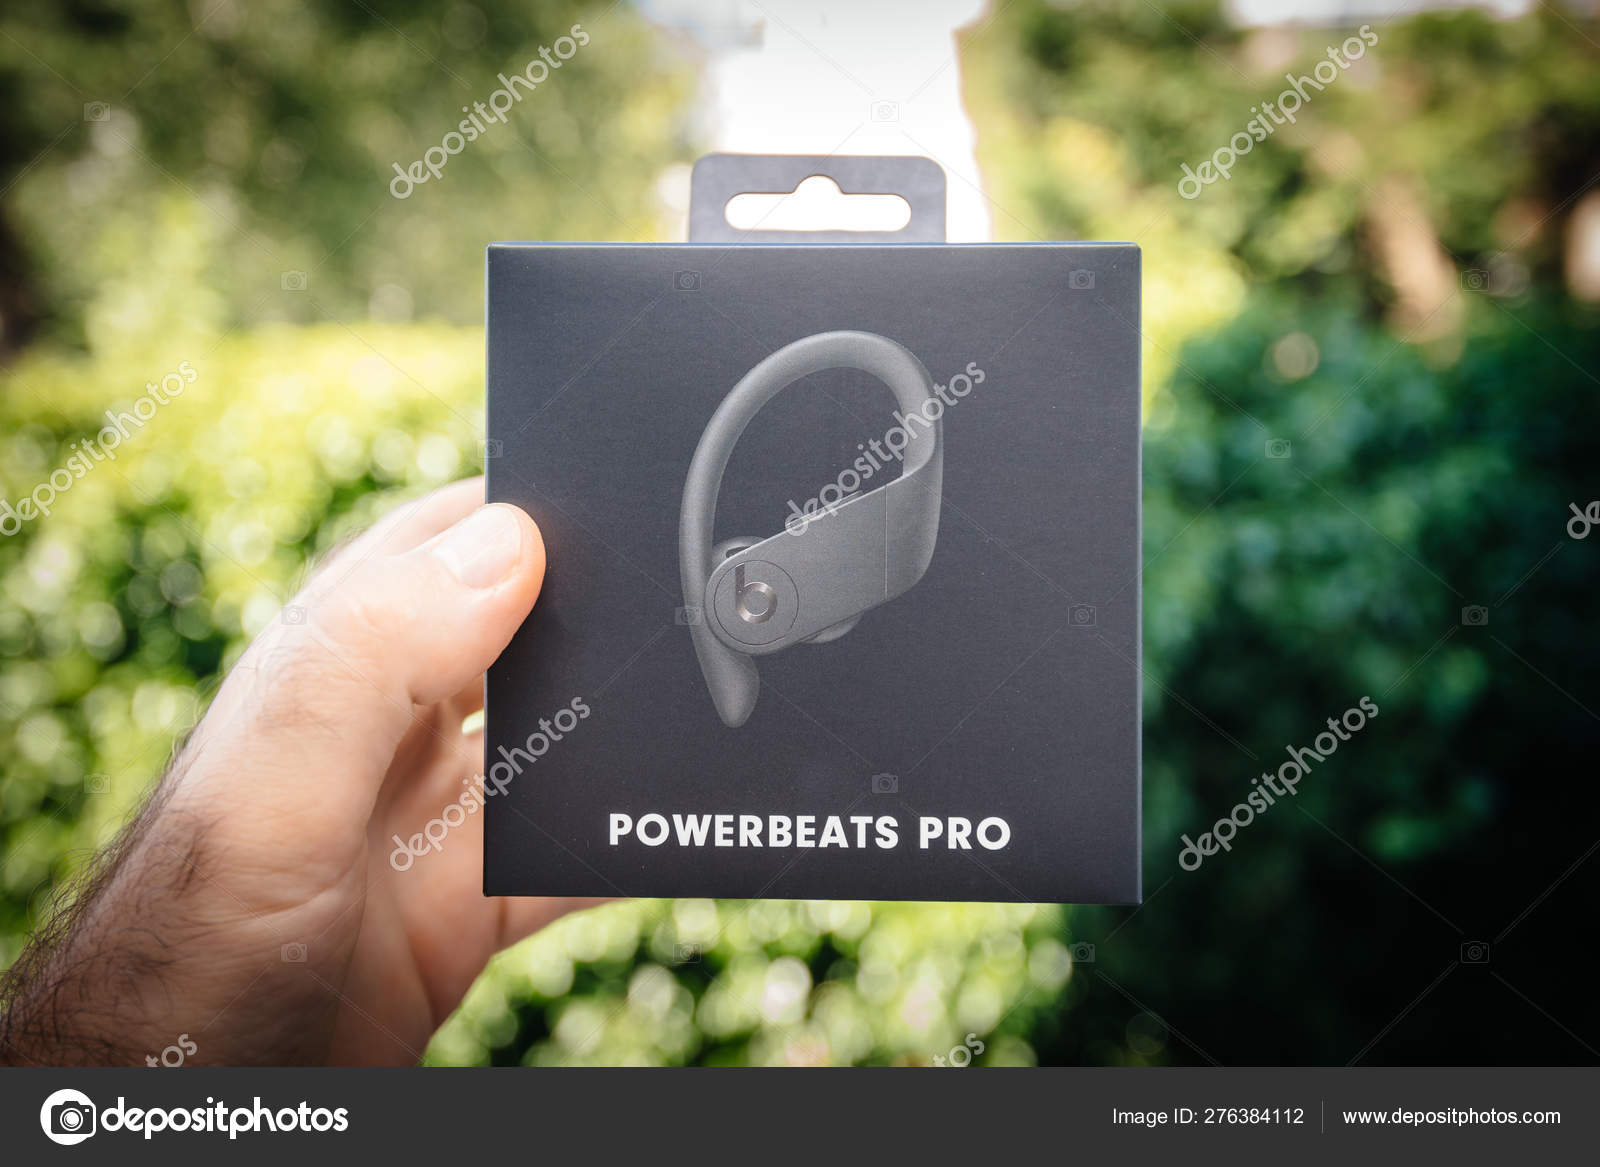 powerbeats pro stock